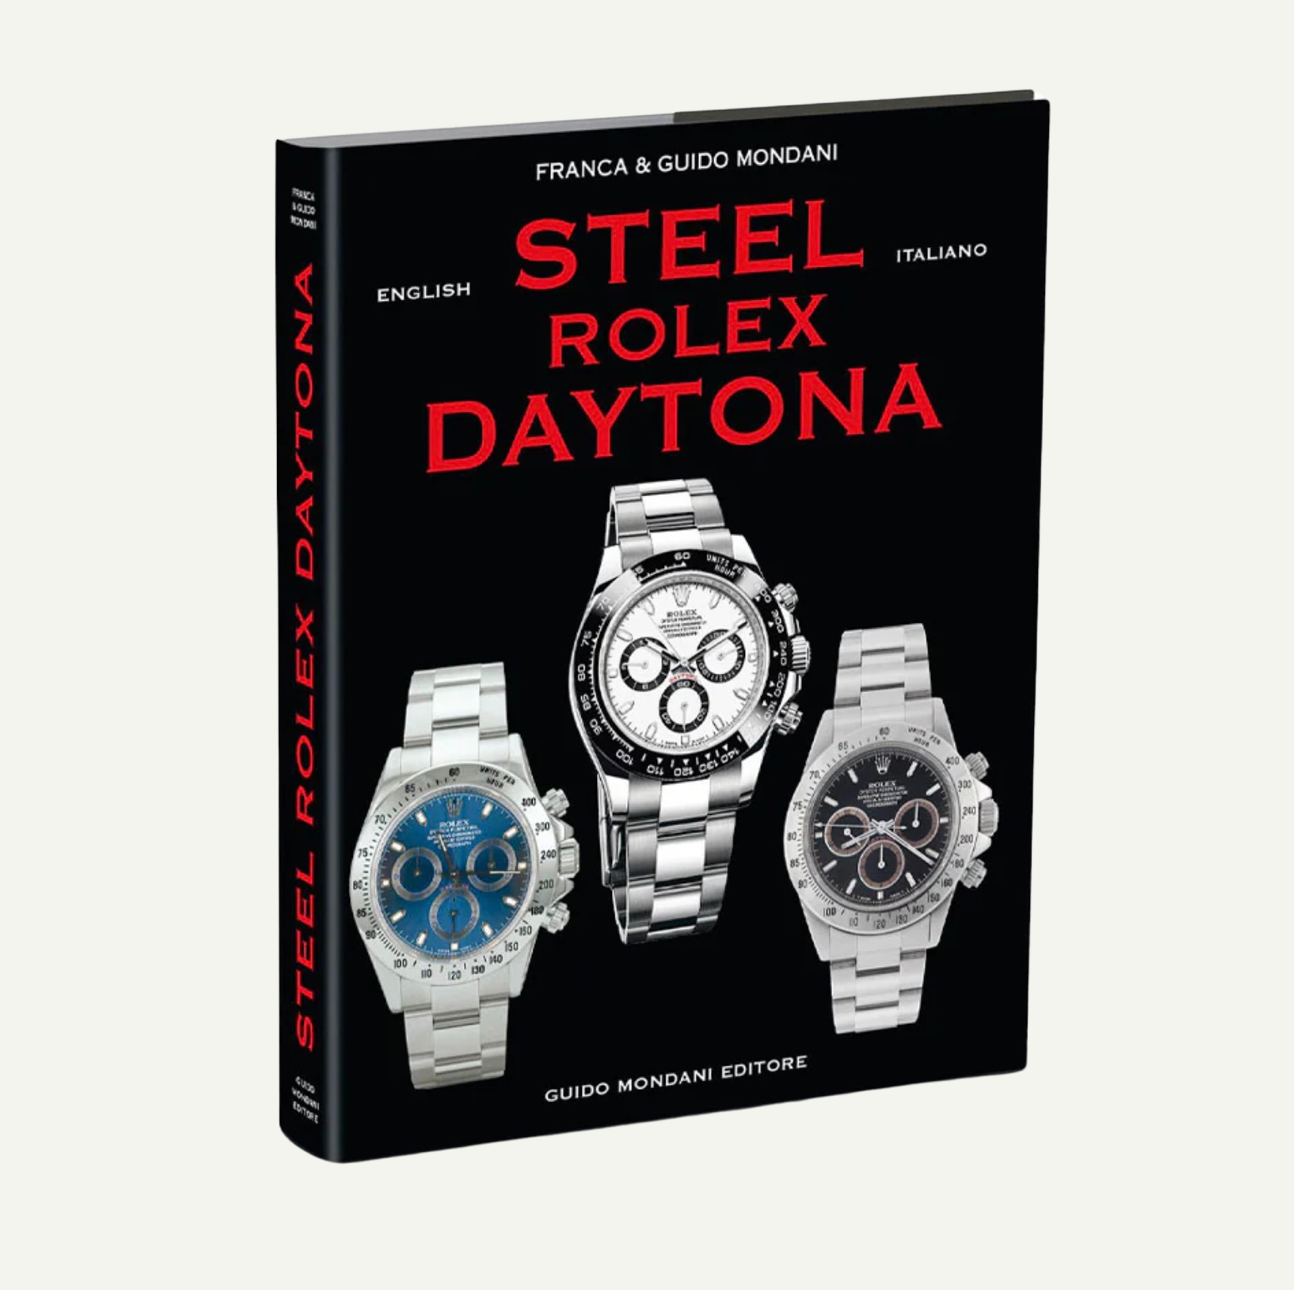 The Steel Rolex Daytona Book